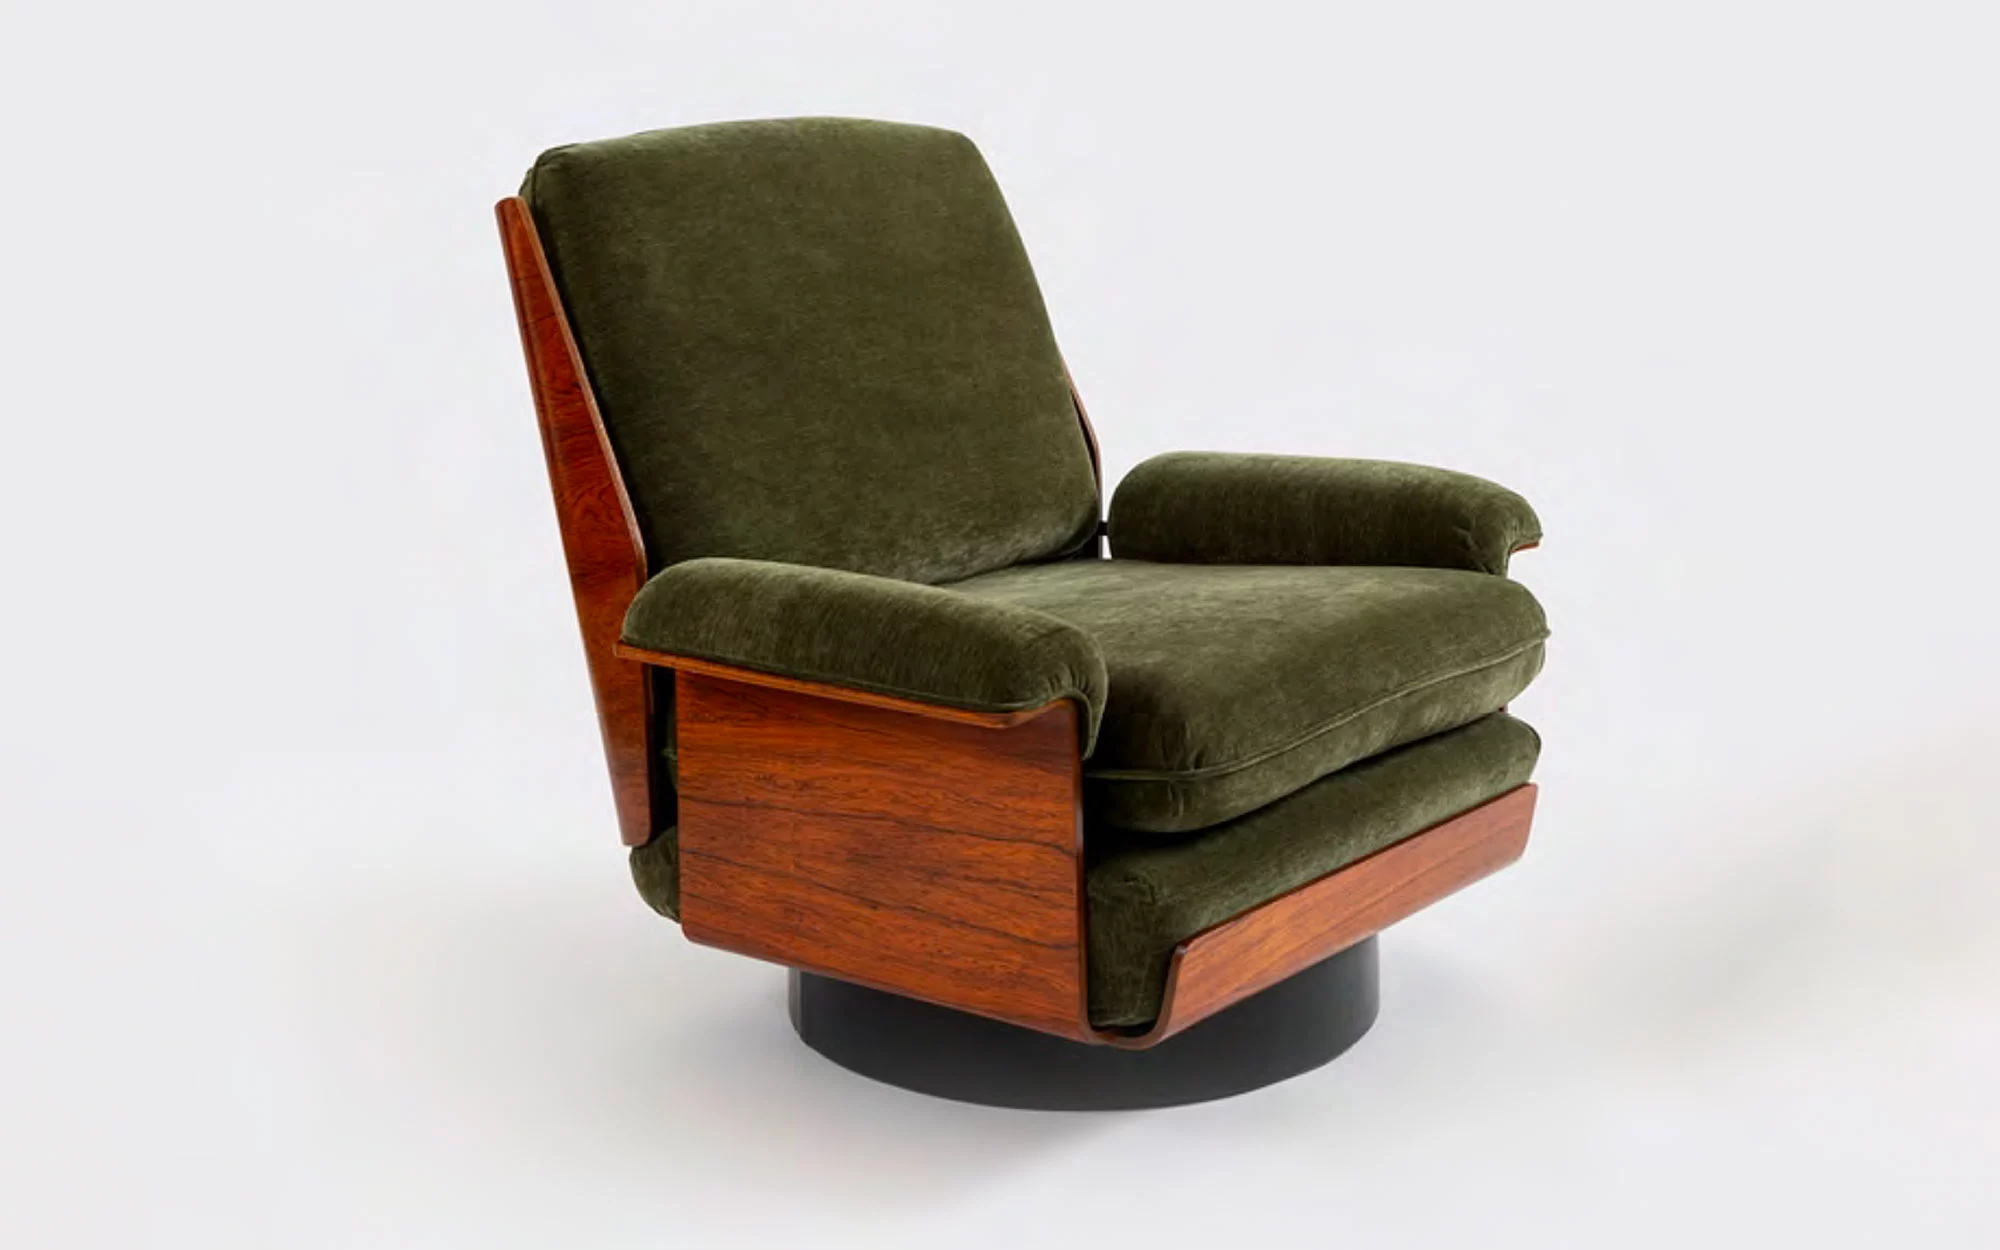 Viborg armchair (1)  - Bernard Brunier - Seating - Galerie kreo